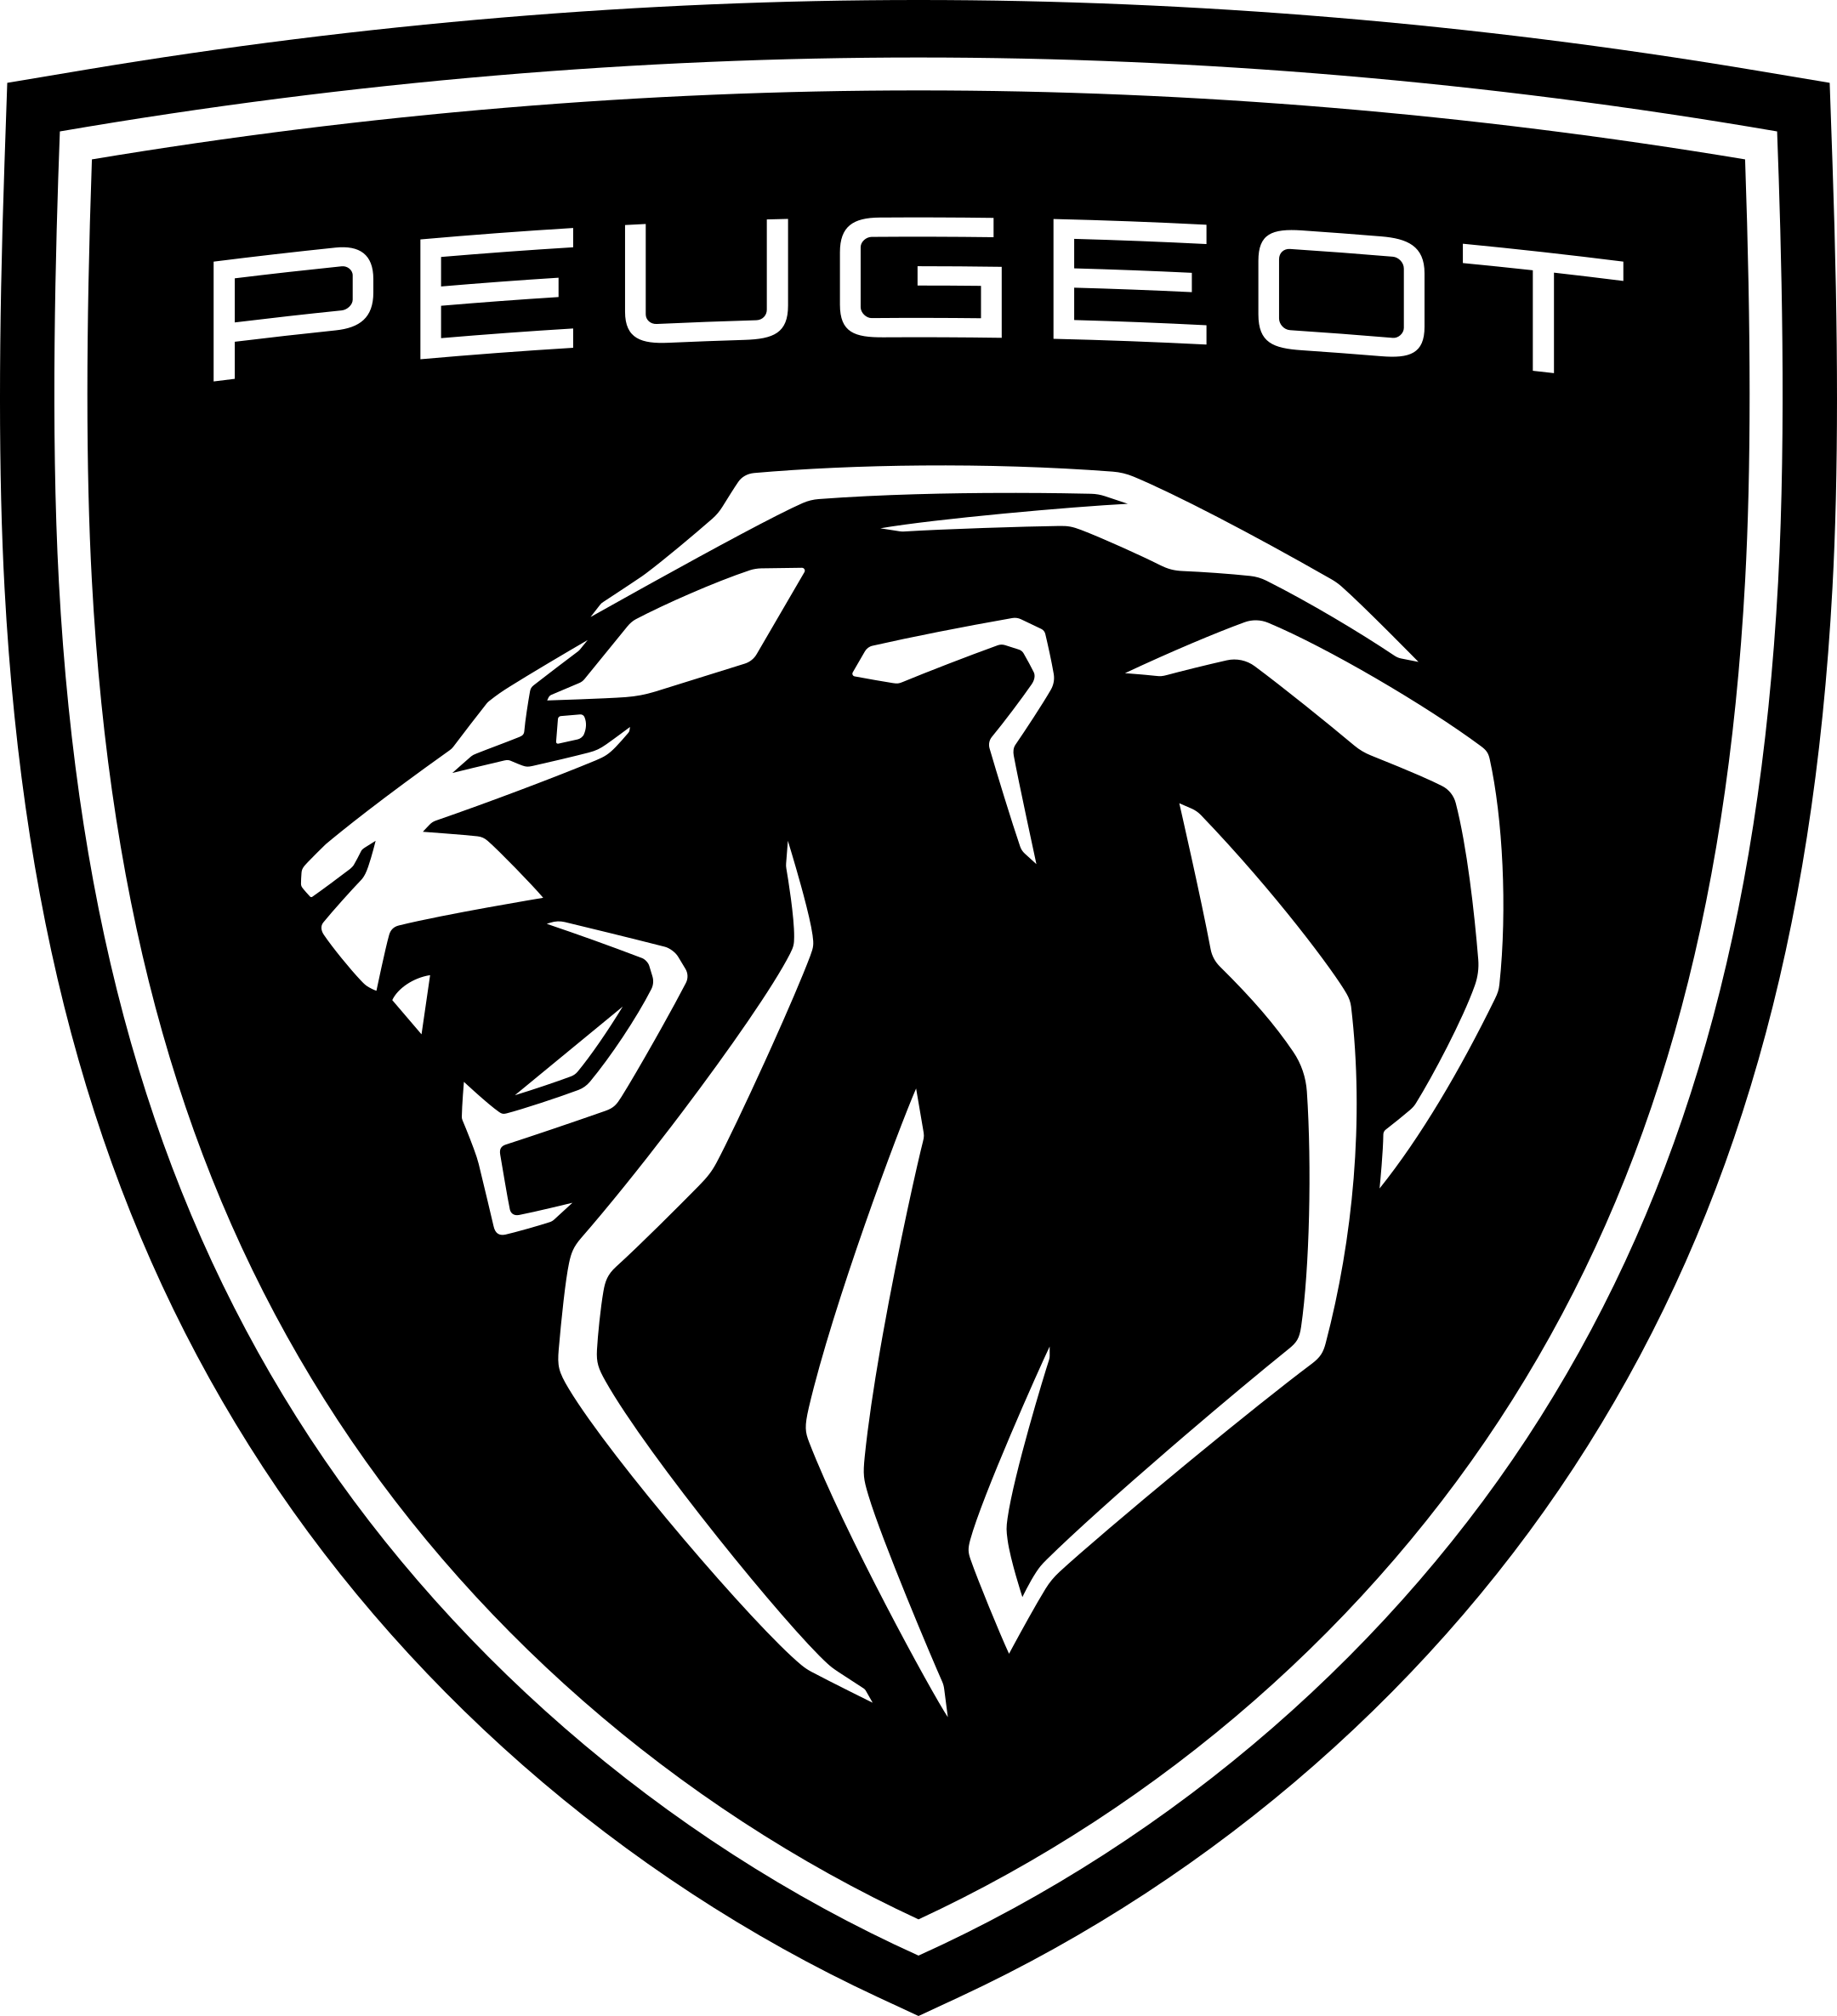 peugeot logo 1 1 - Peugeot Logo